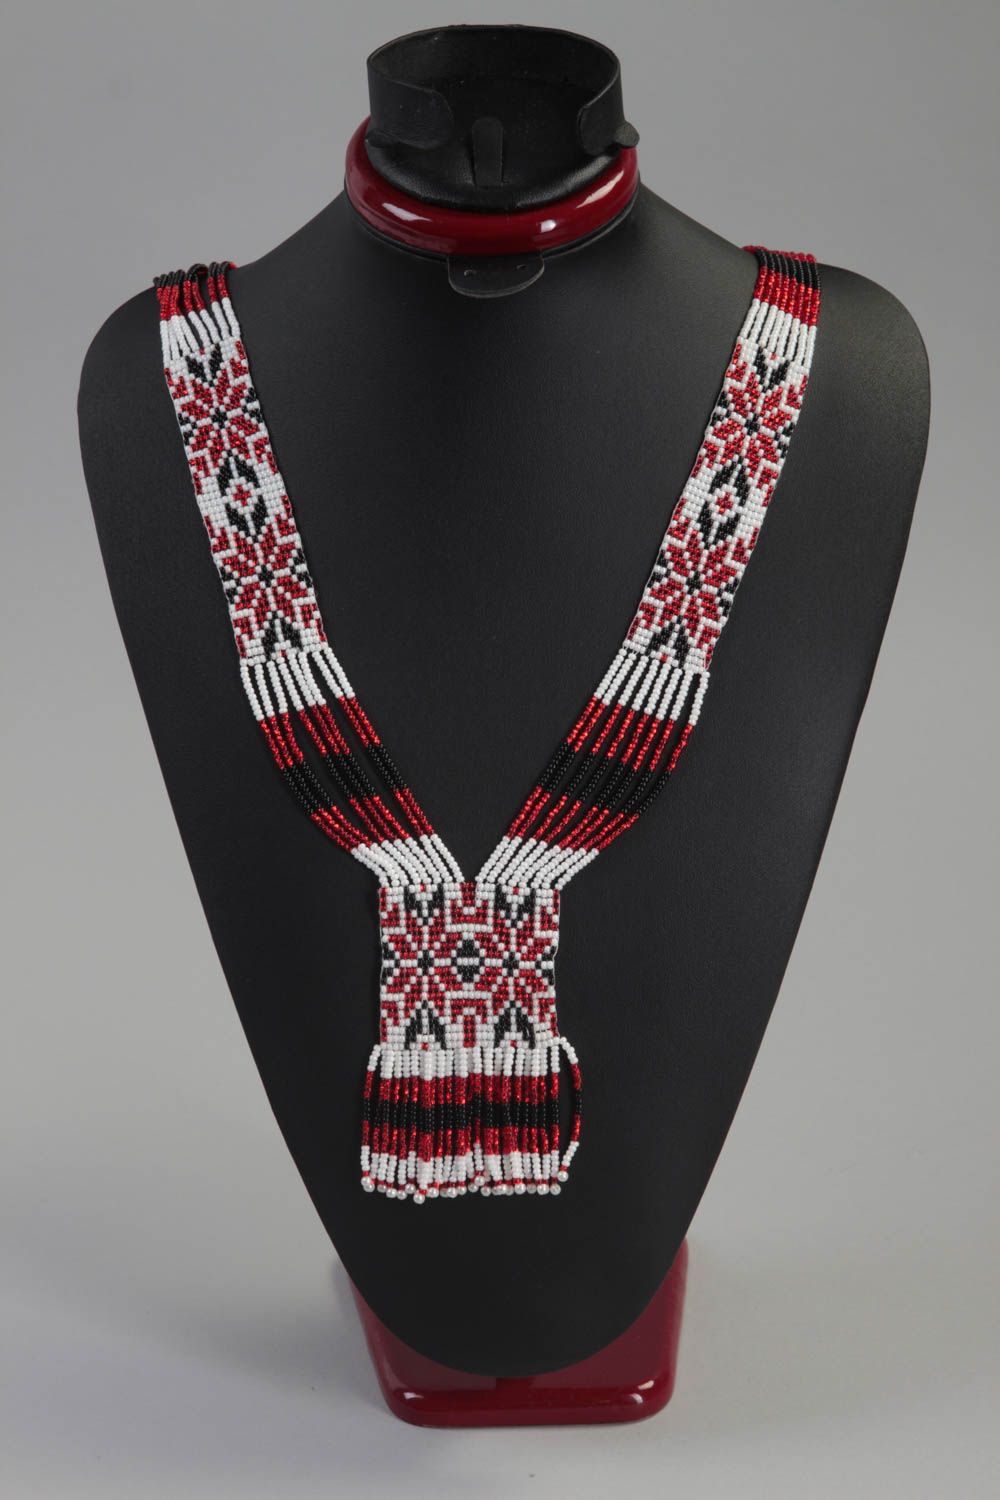 Unusual handmade beaded necklace designer gerdan necklace cool jewelry designs photo 1